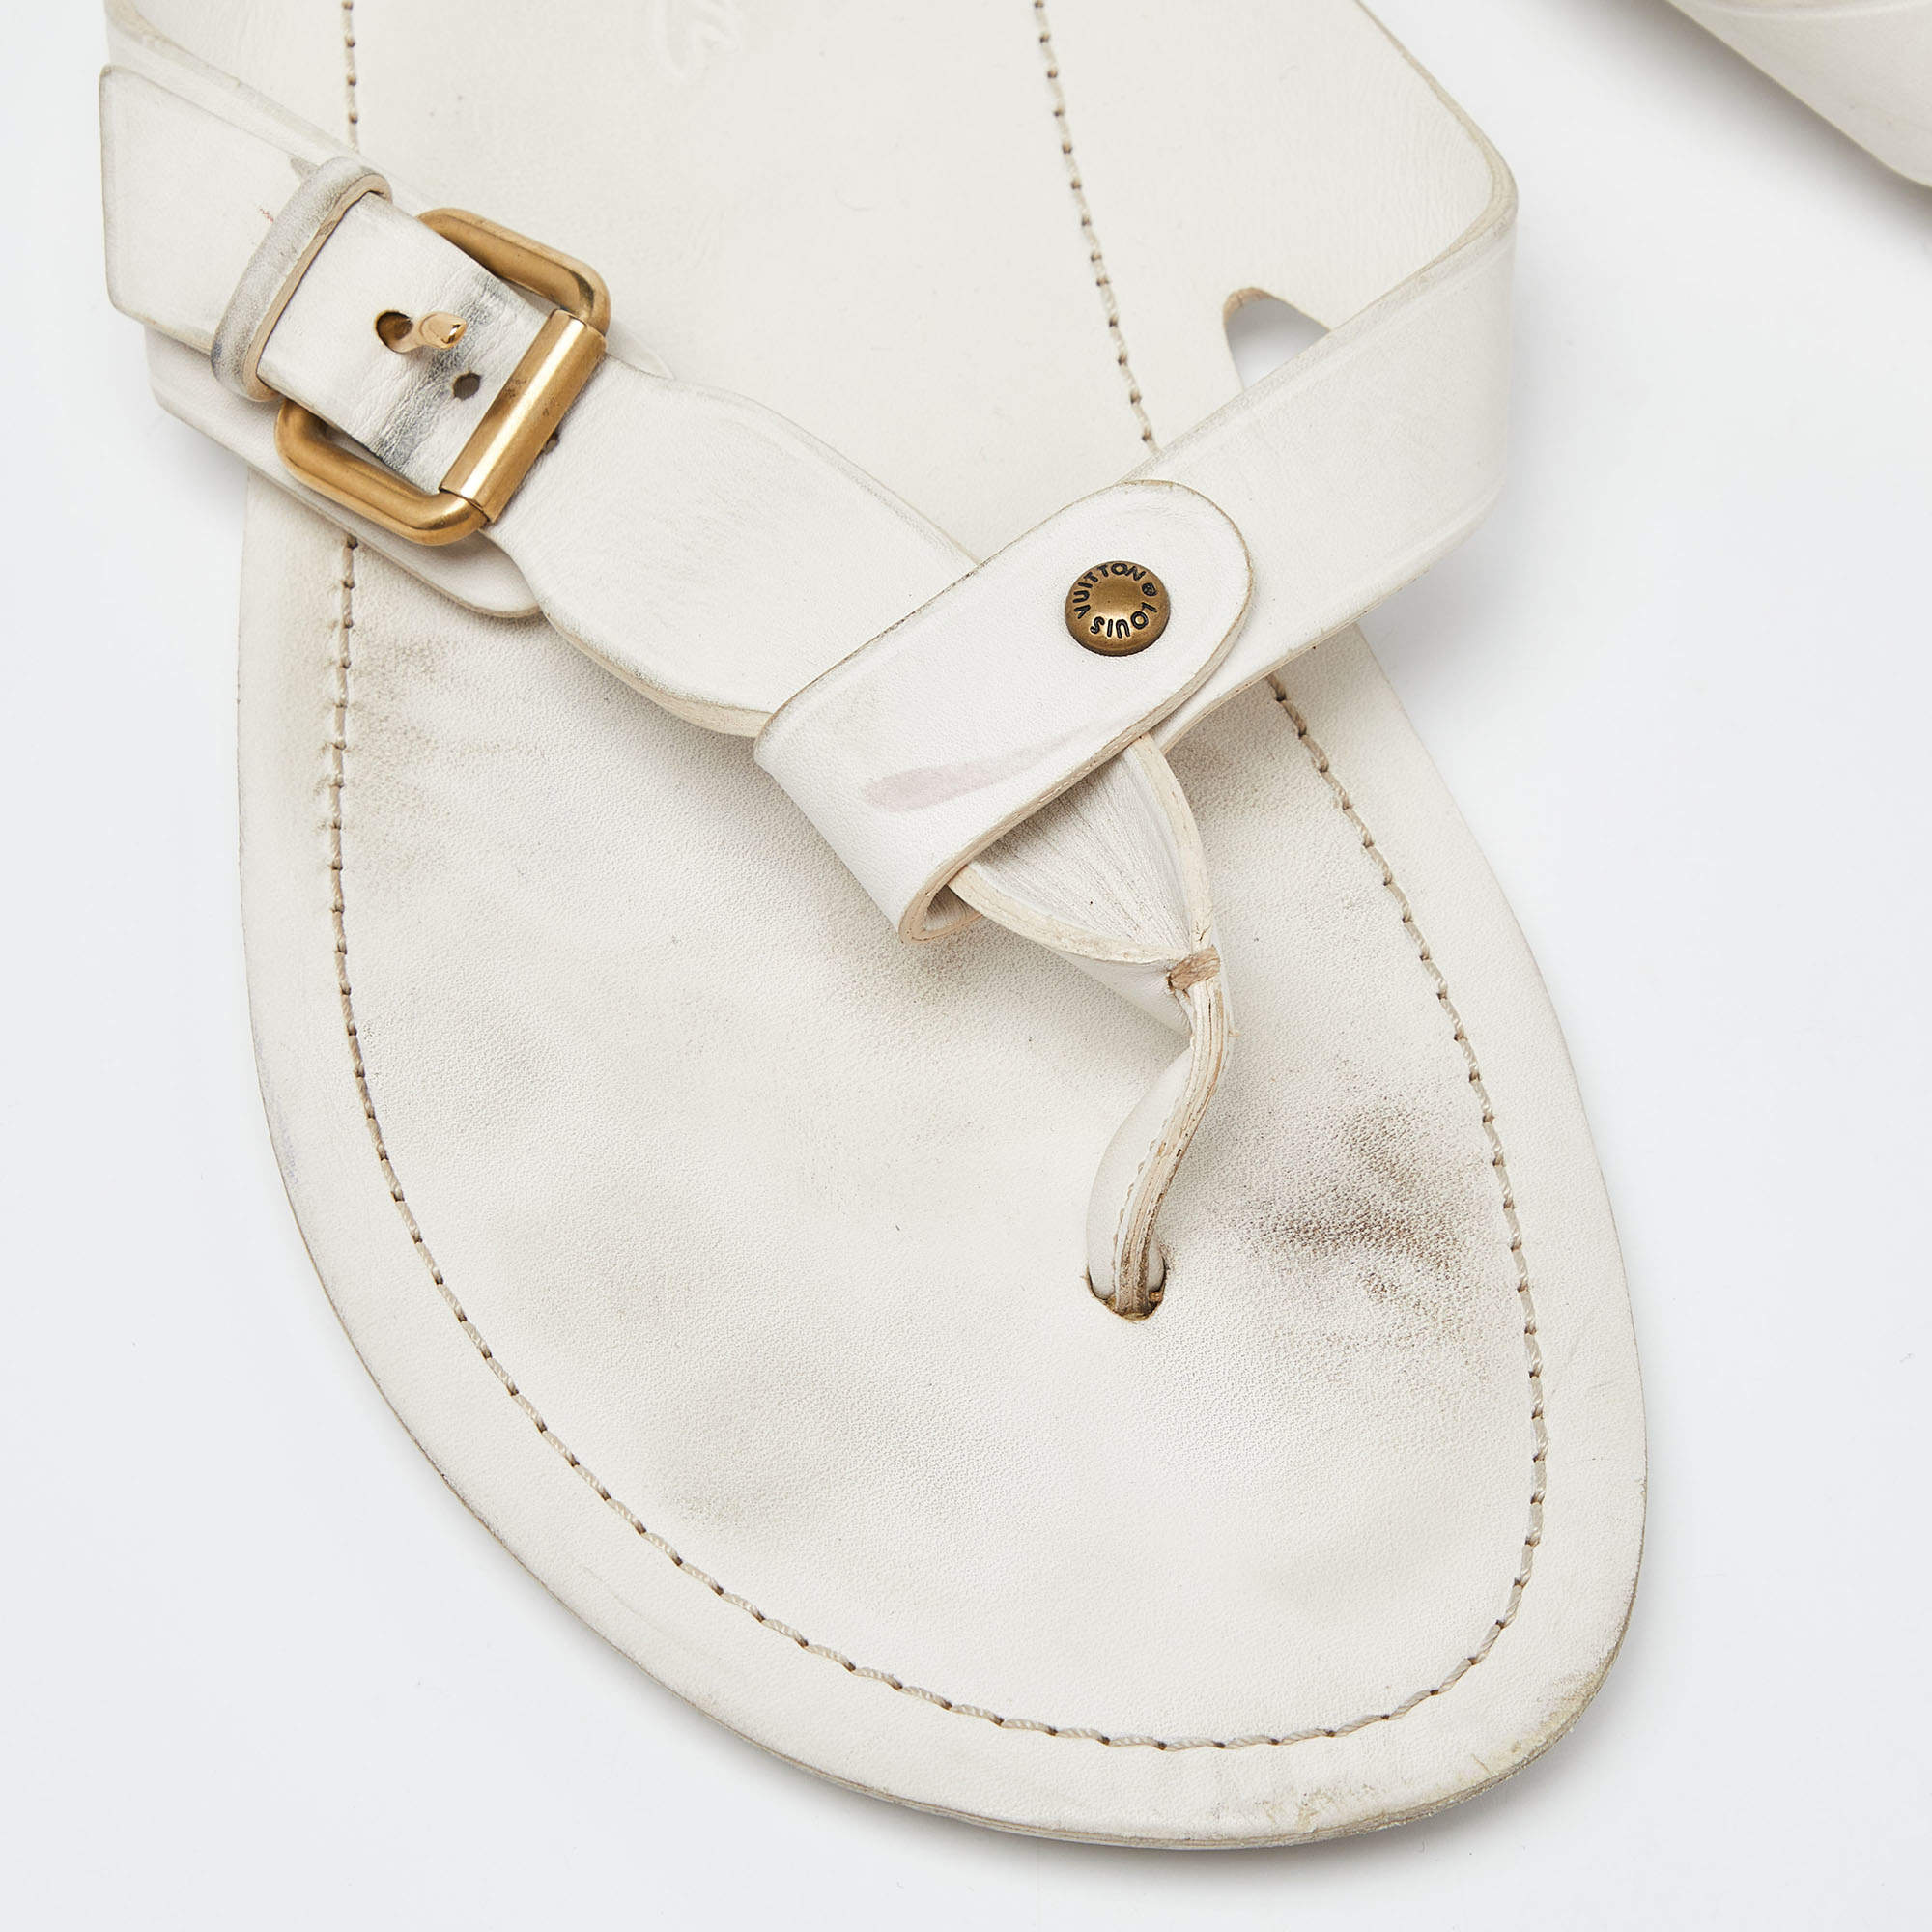 Louis Vuitton Off White Leather Thong Flat Sandals Size Size 43 Louis  Vuitton